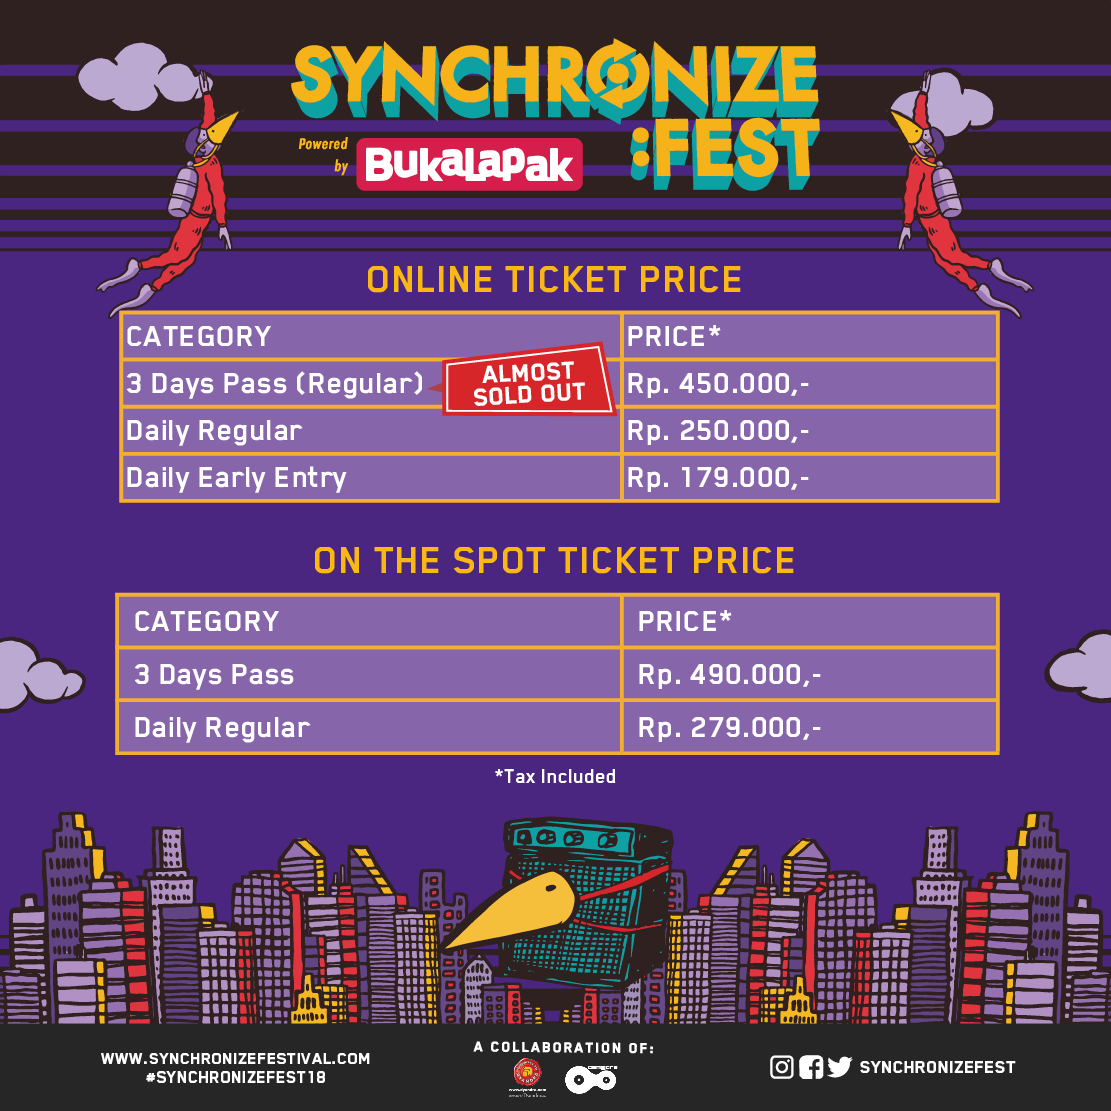 114 Artis Siap Tampil di Synchronize Fest 2018